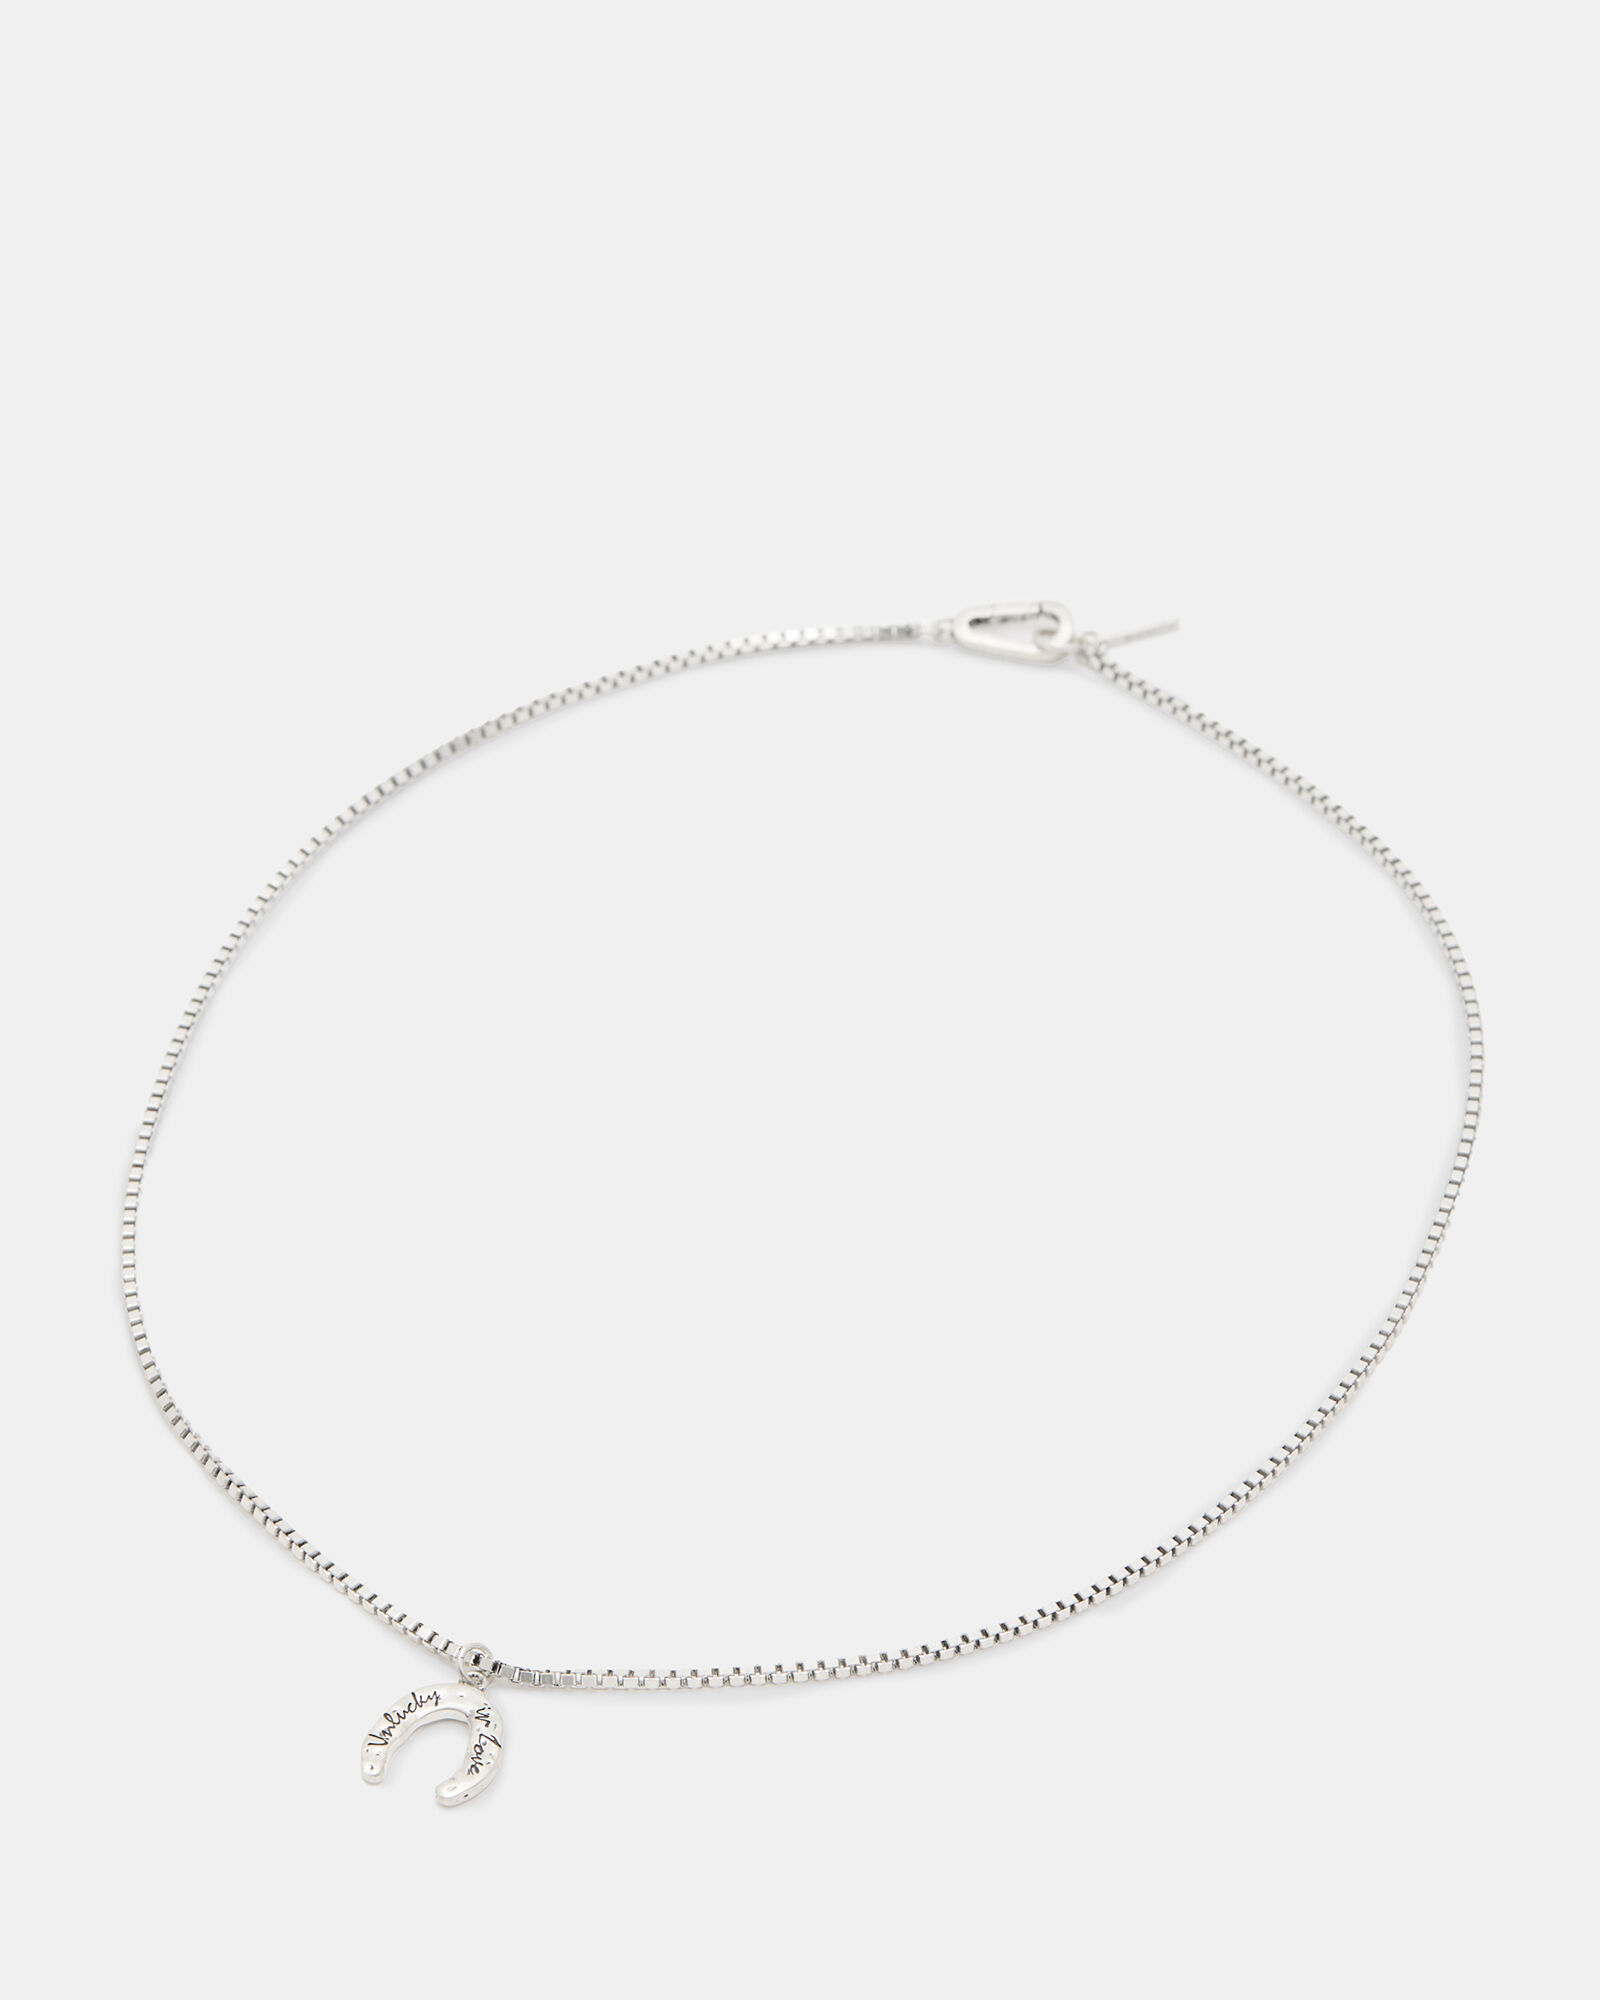 Horseshoe Pendant Box Chain Necklace